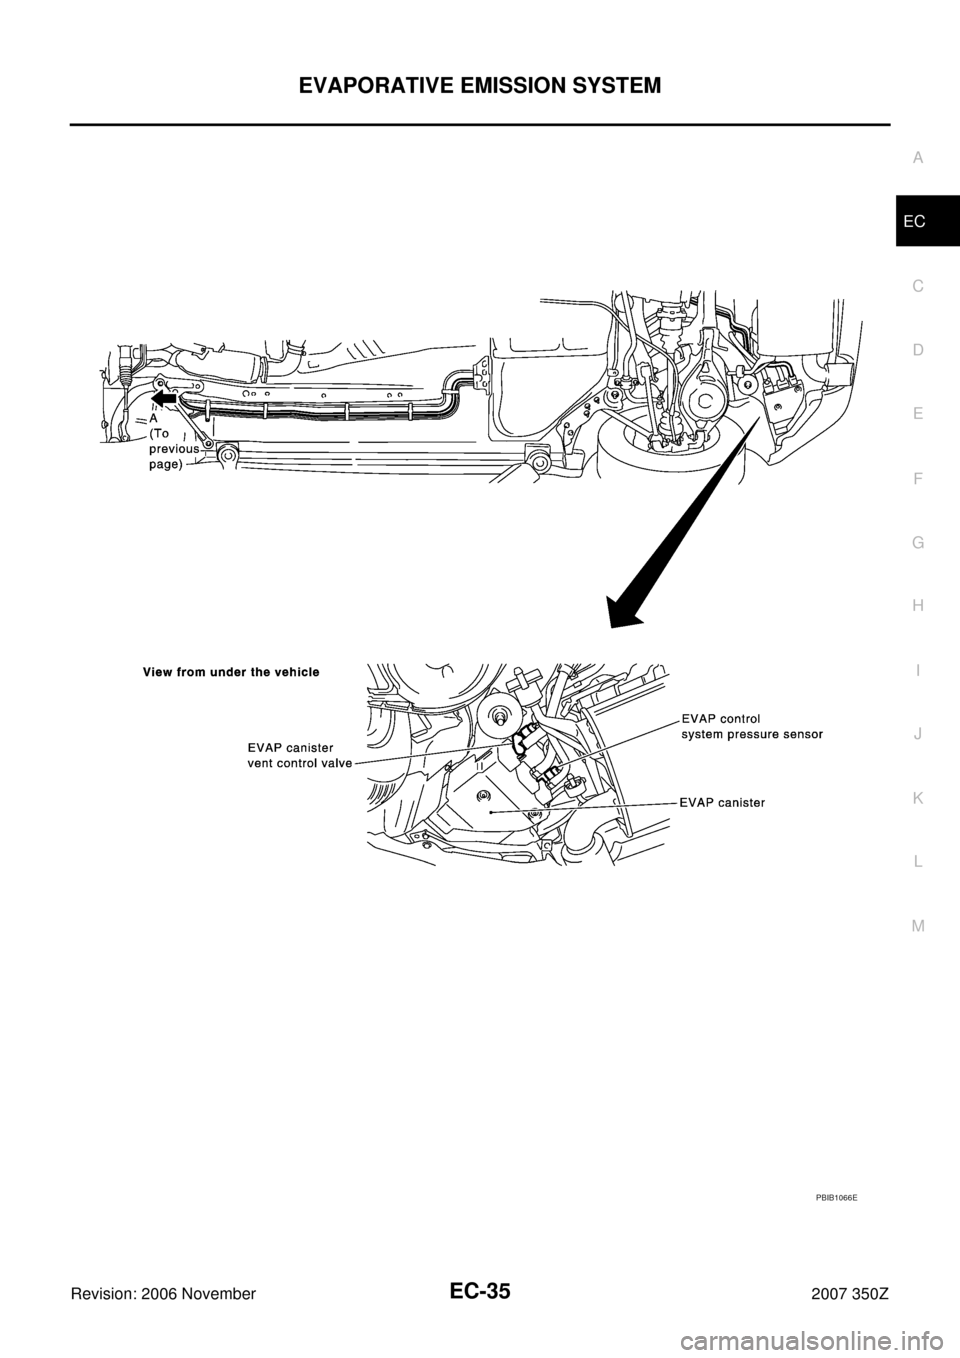 NISSAN 350Z 2007 Z33 Engine Control Owners Guide EVAPORATIVE EMISSION SYSTEM
EC-35
C
D
E
F
G
H
I
J
K
L
MA
EC
Revision: 2006 November2007 350Z
PBIB1066E 